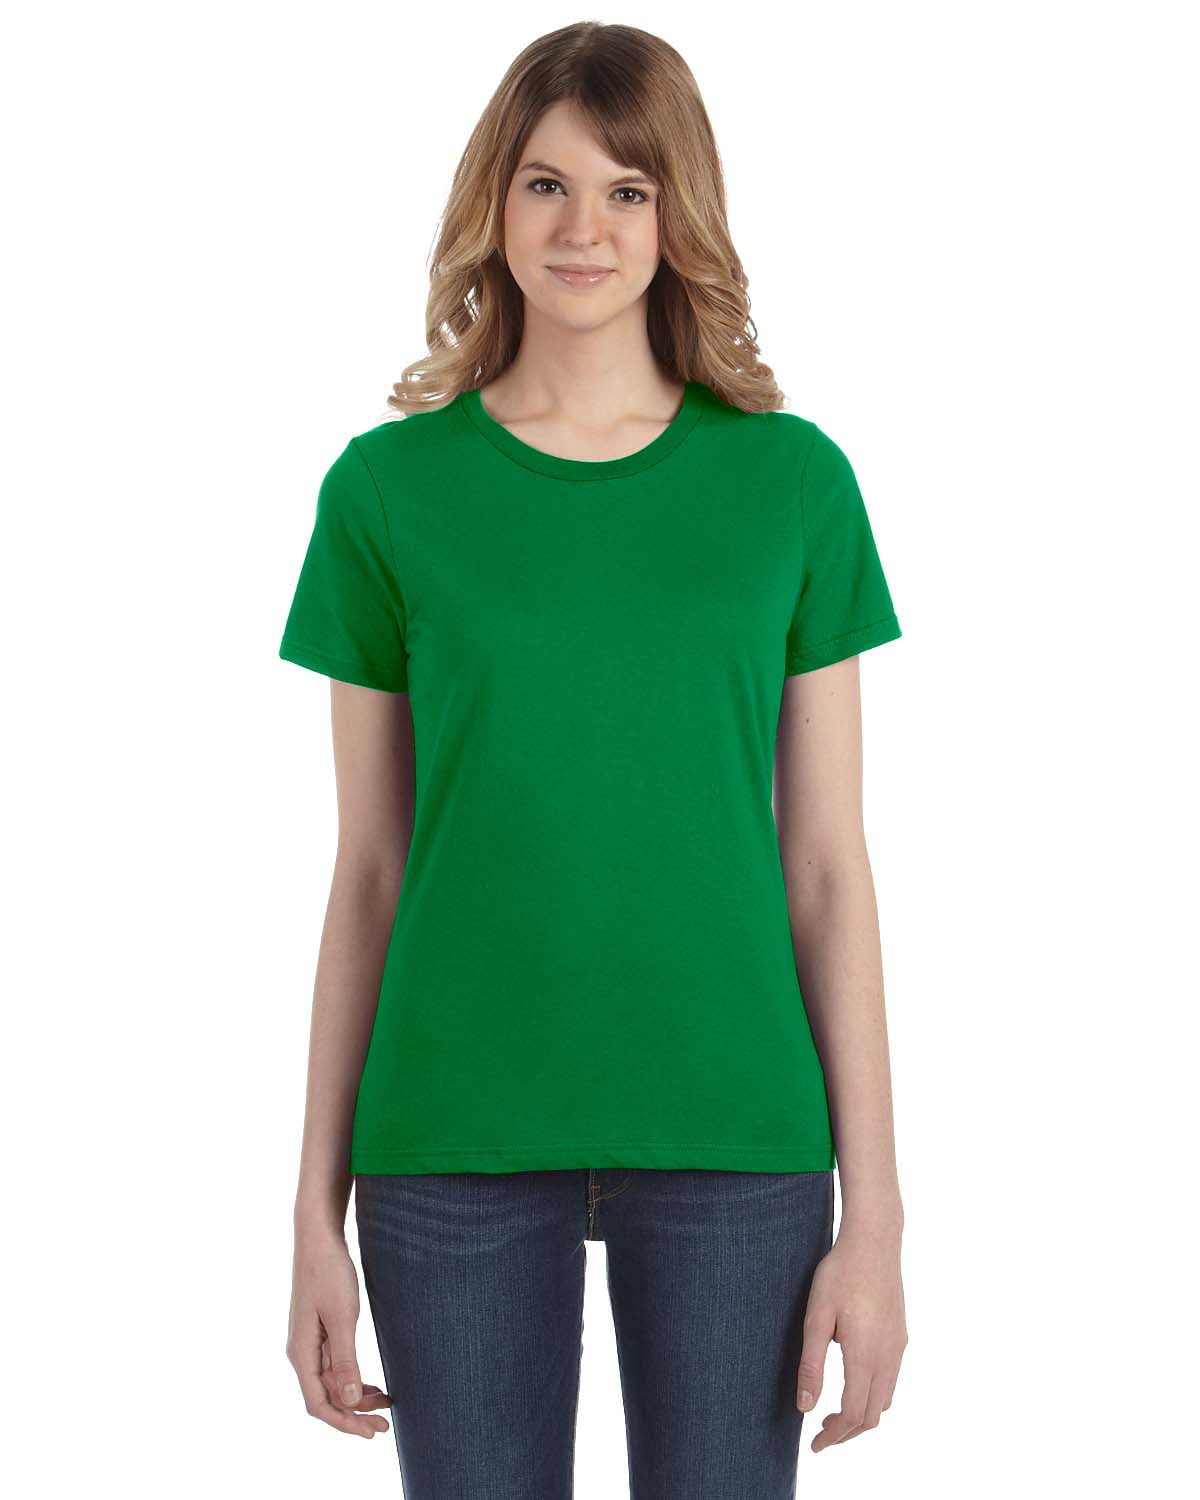 Clementine Womens Cotton Crew Neck T-Shirt 